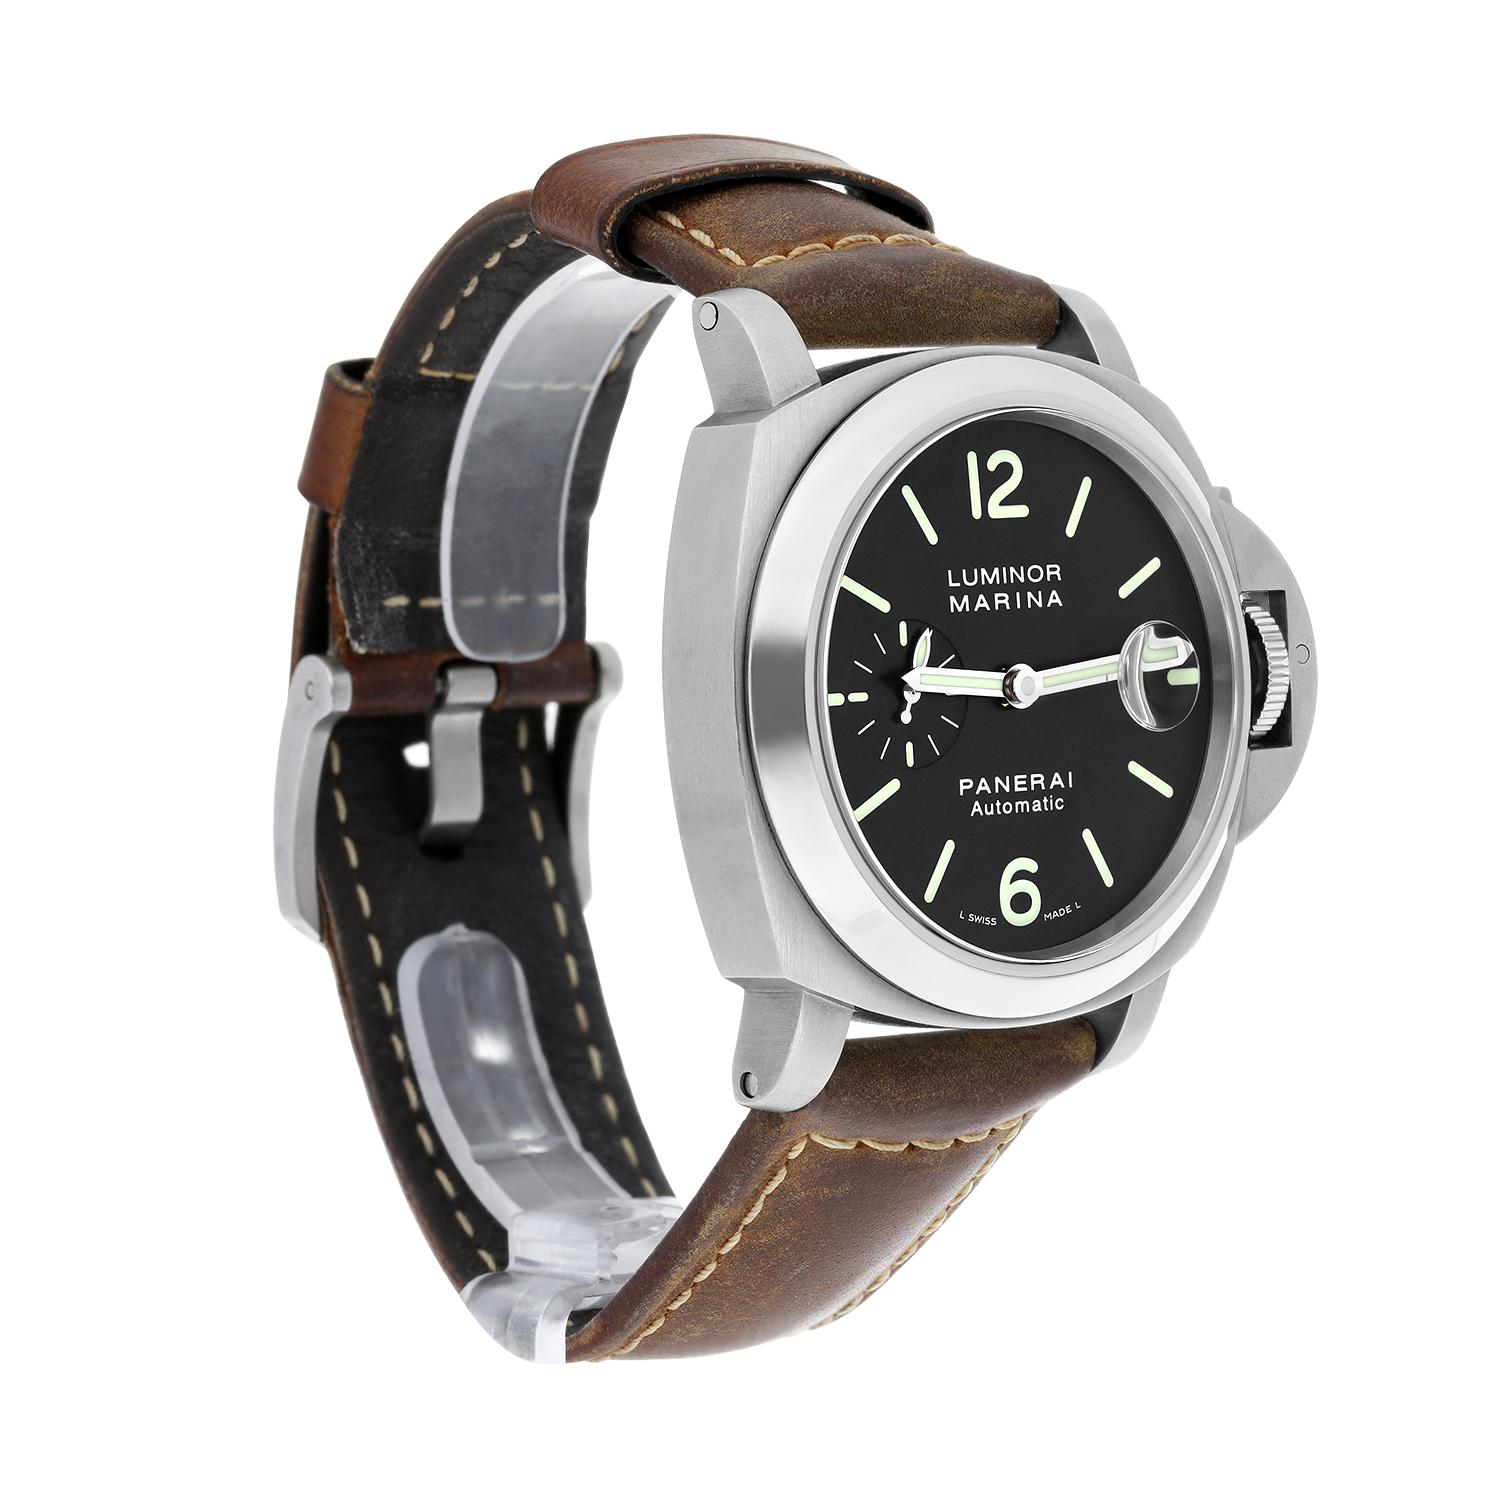 Panerai Luminor Marina PAM00104 Small Second Date Automatic Men's Watch 2